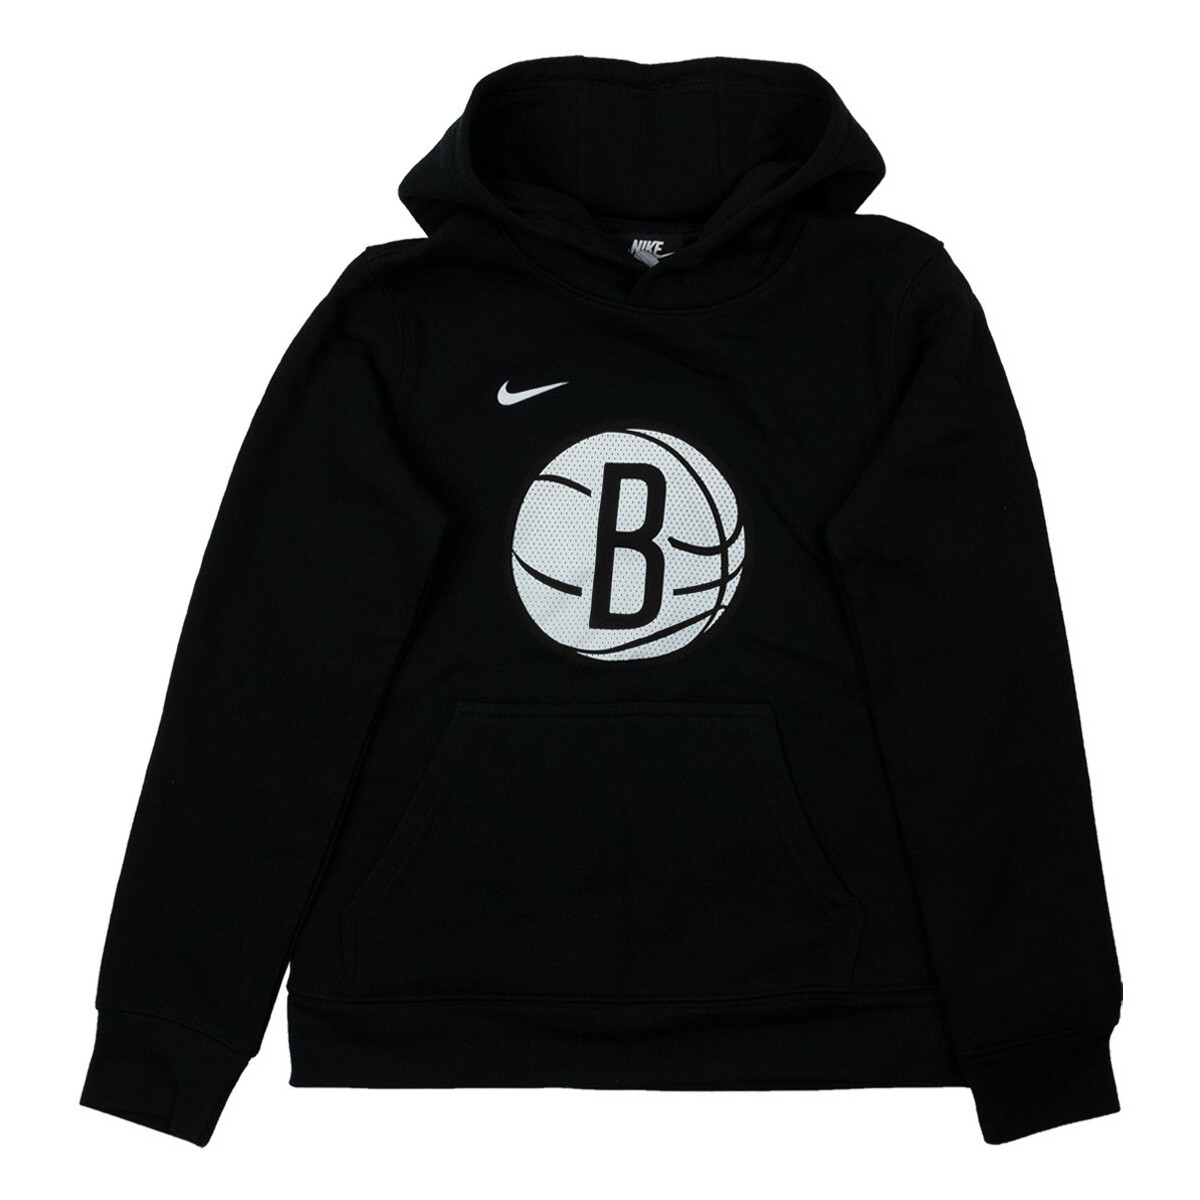 vaatteet Pojat Ulkoilutakki Nike NBA Brooklyn Nets Fleece Hoodie Musta